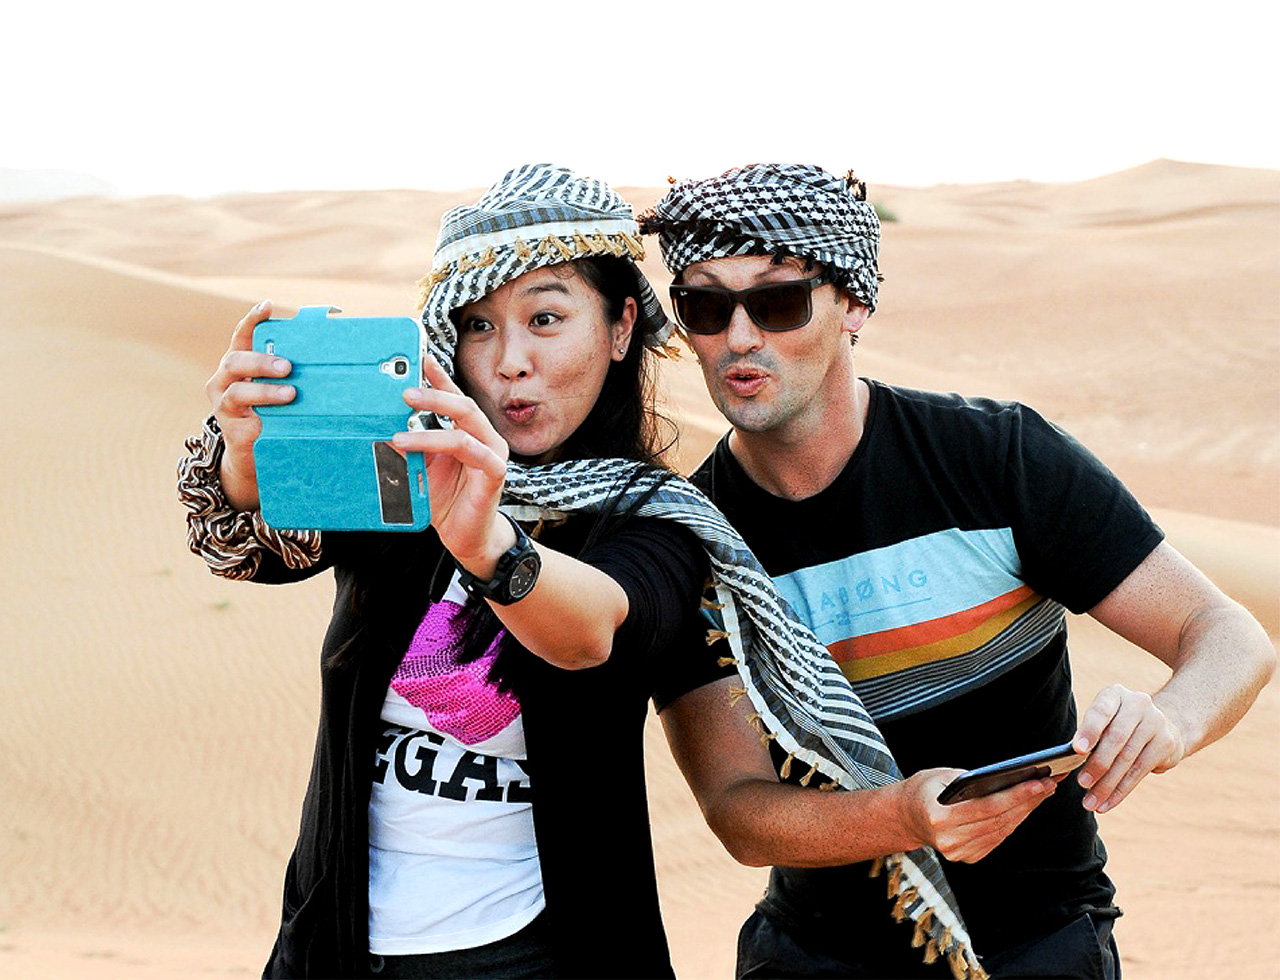 Two delegates donned in Emirati style Arab headgear, taking a selfie during a desert safari tour in Dubai